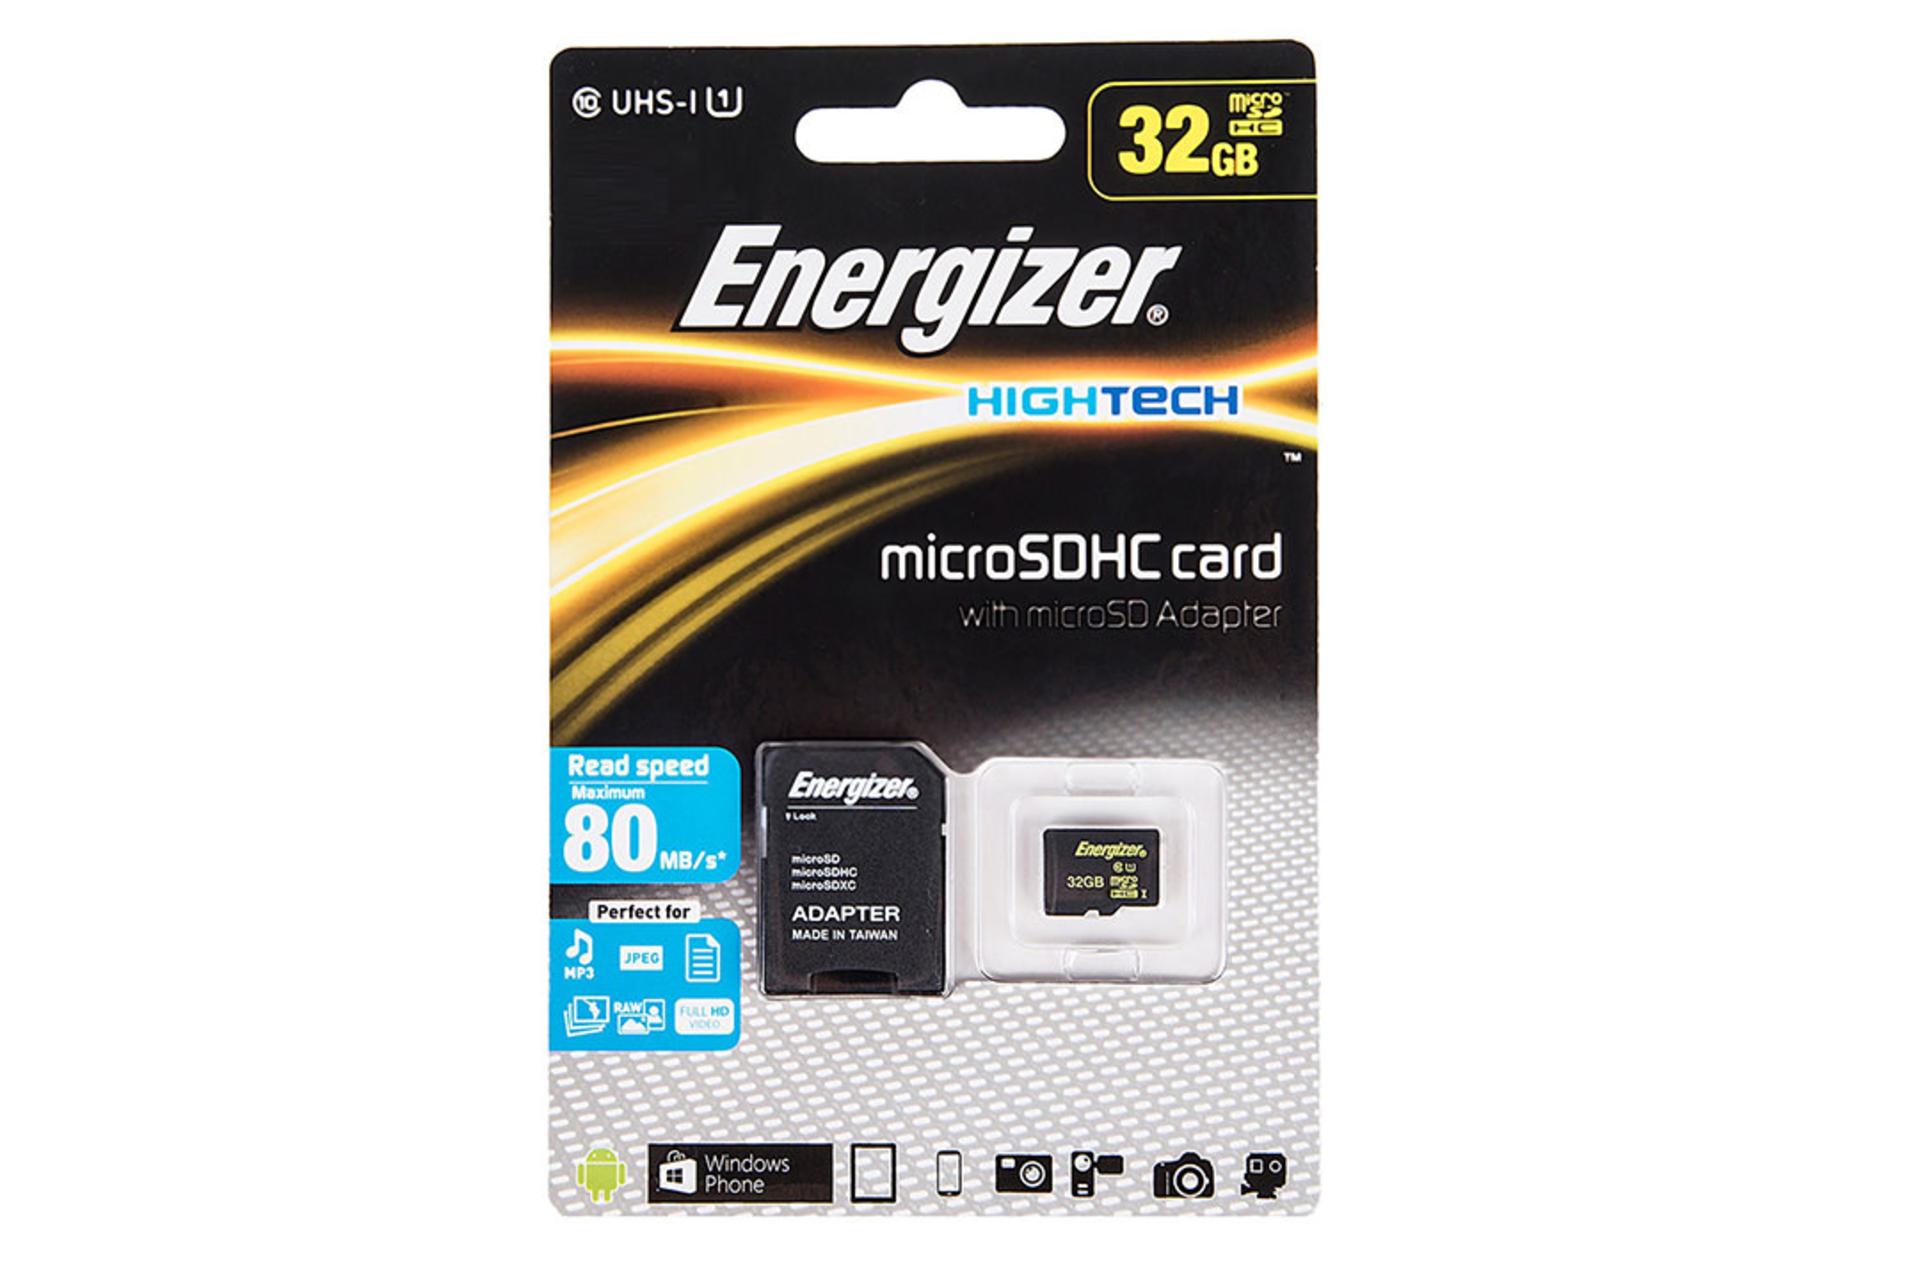 Energizer Hightech microSDHC Class 10 UHS-I U1 32GB